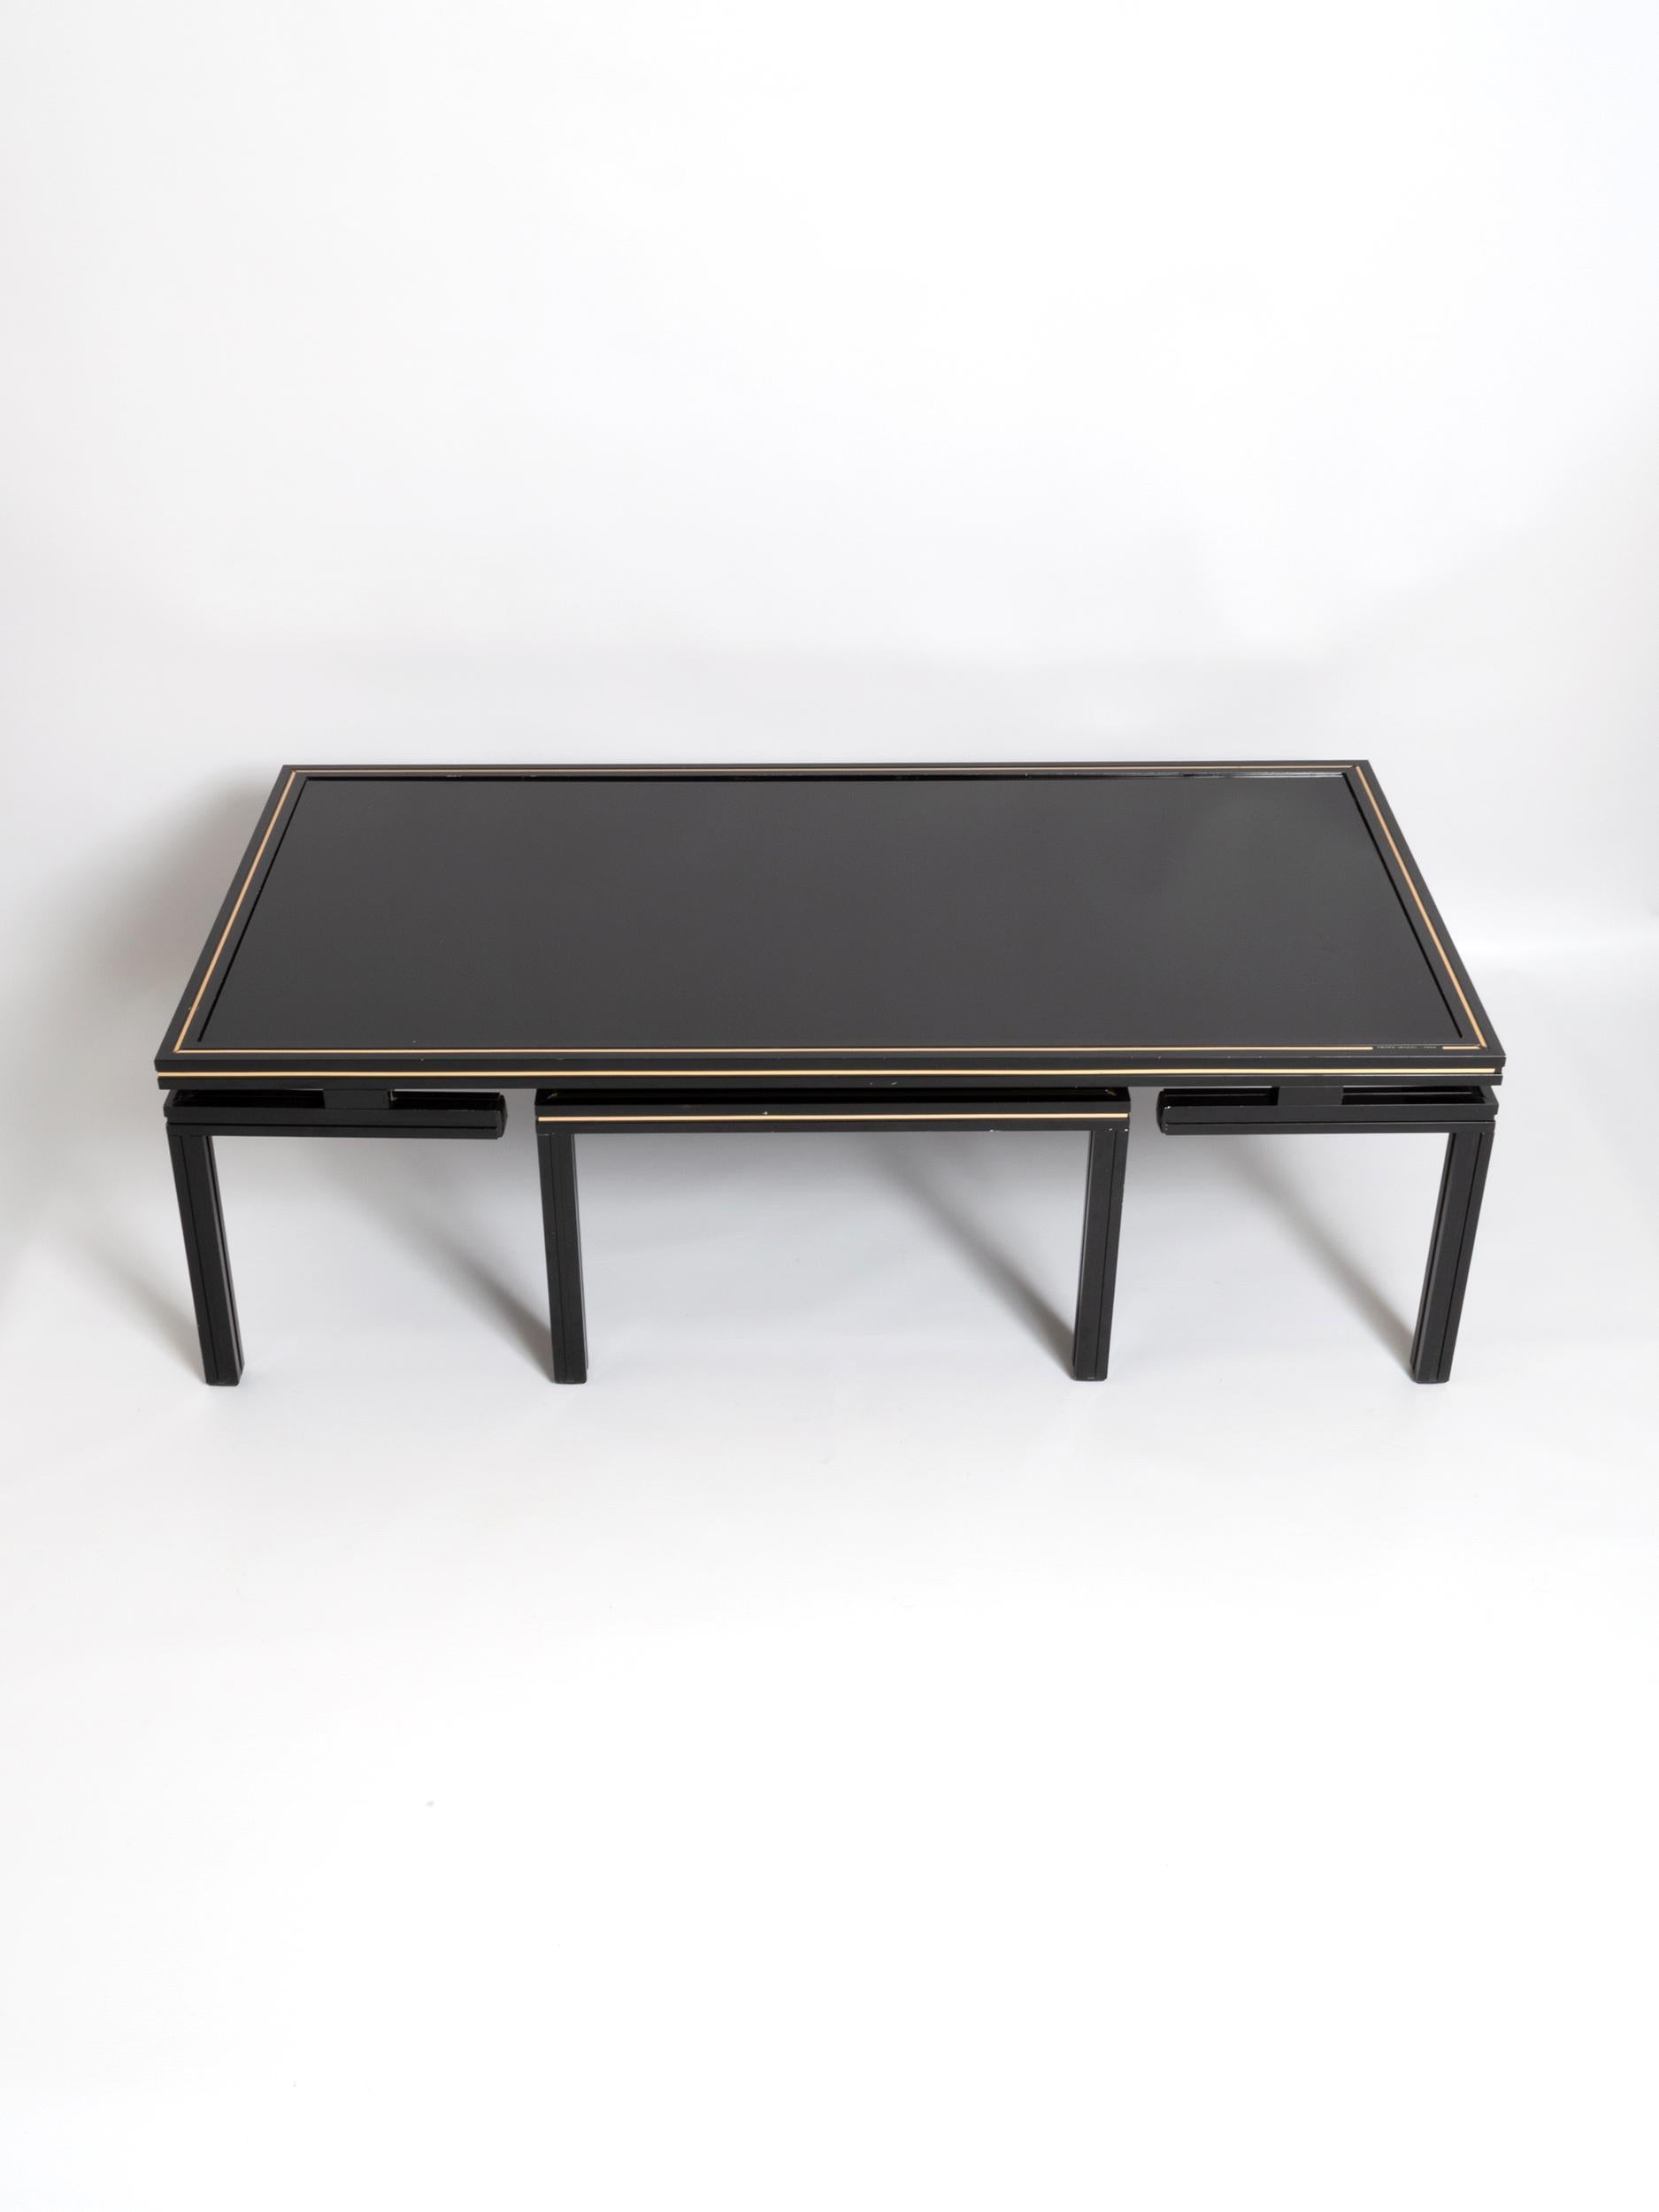 Aluminum Pierre Vandel Paris Black Lacquer Coffee Table with Nesting Table, France